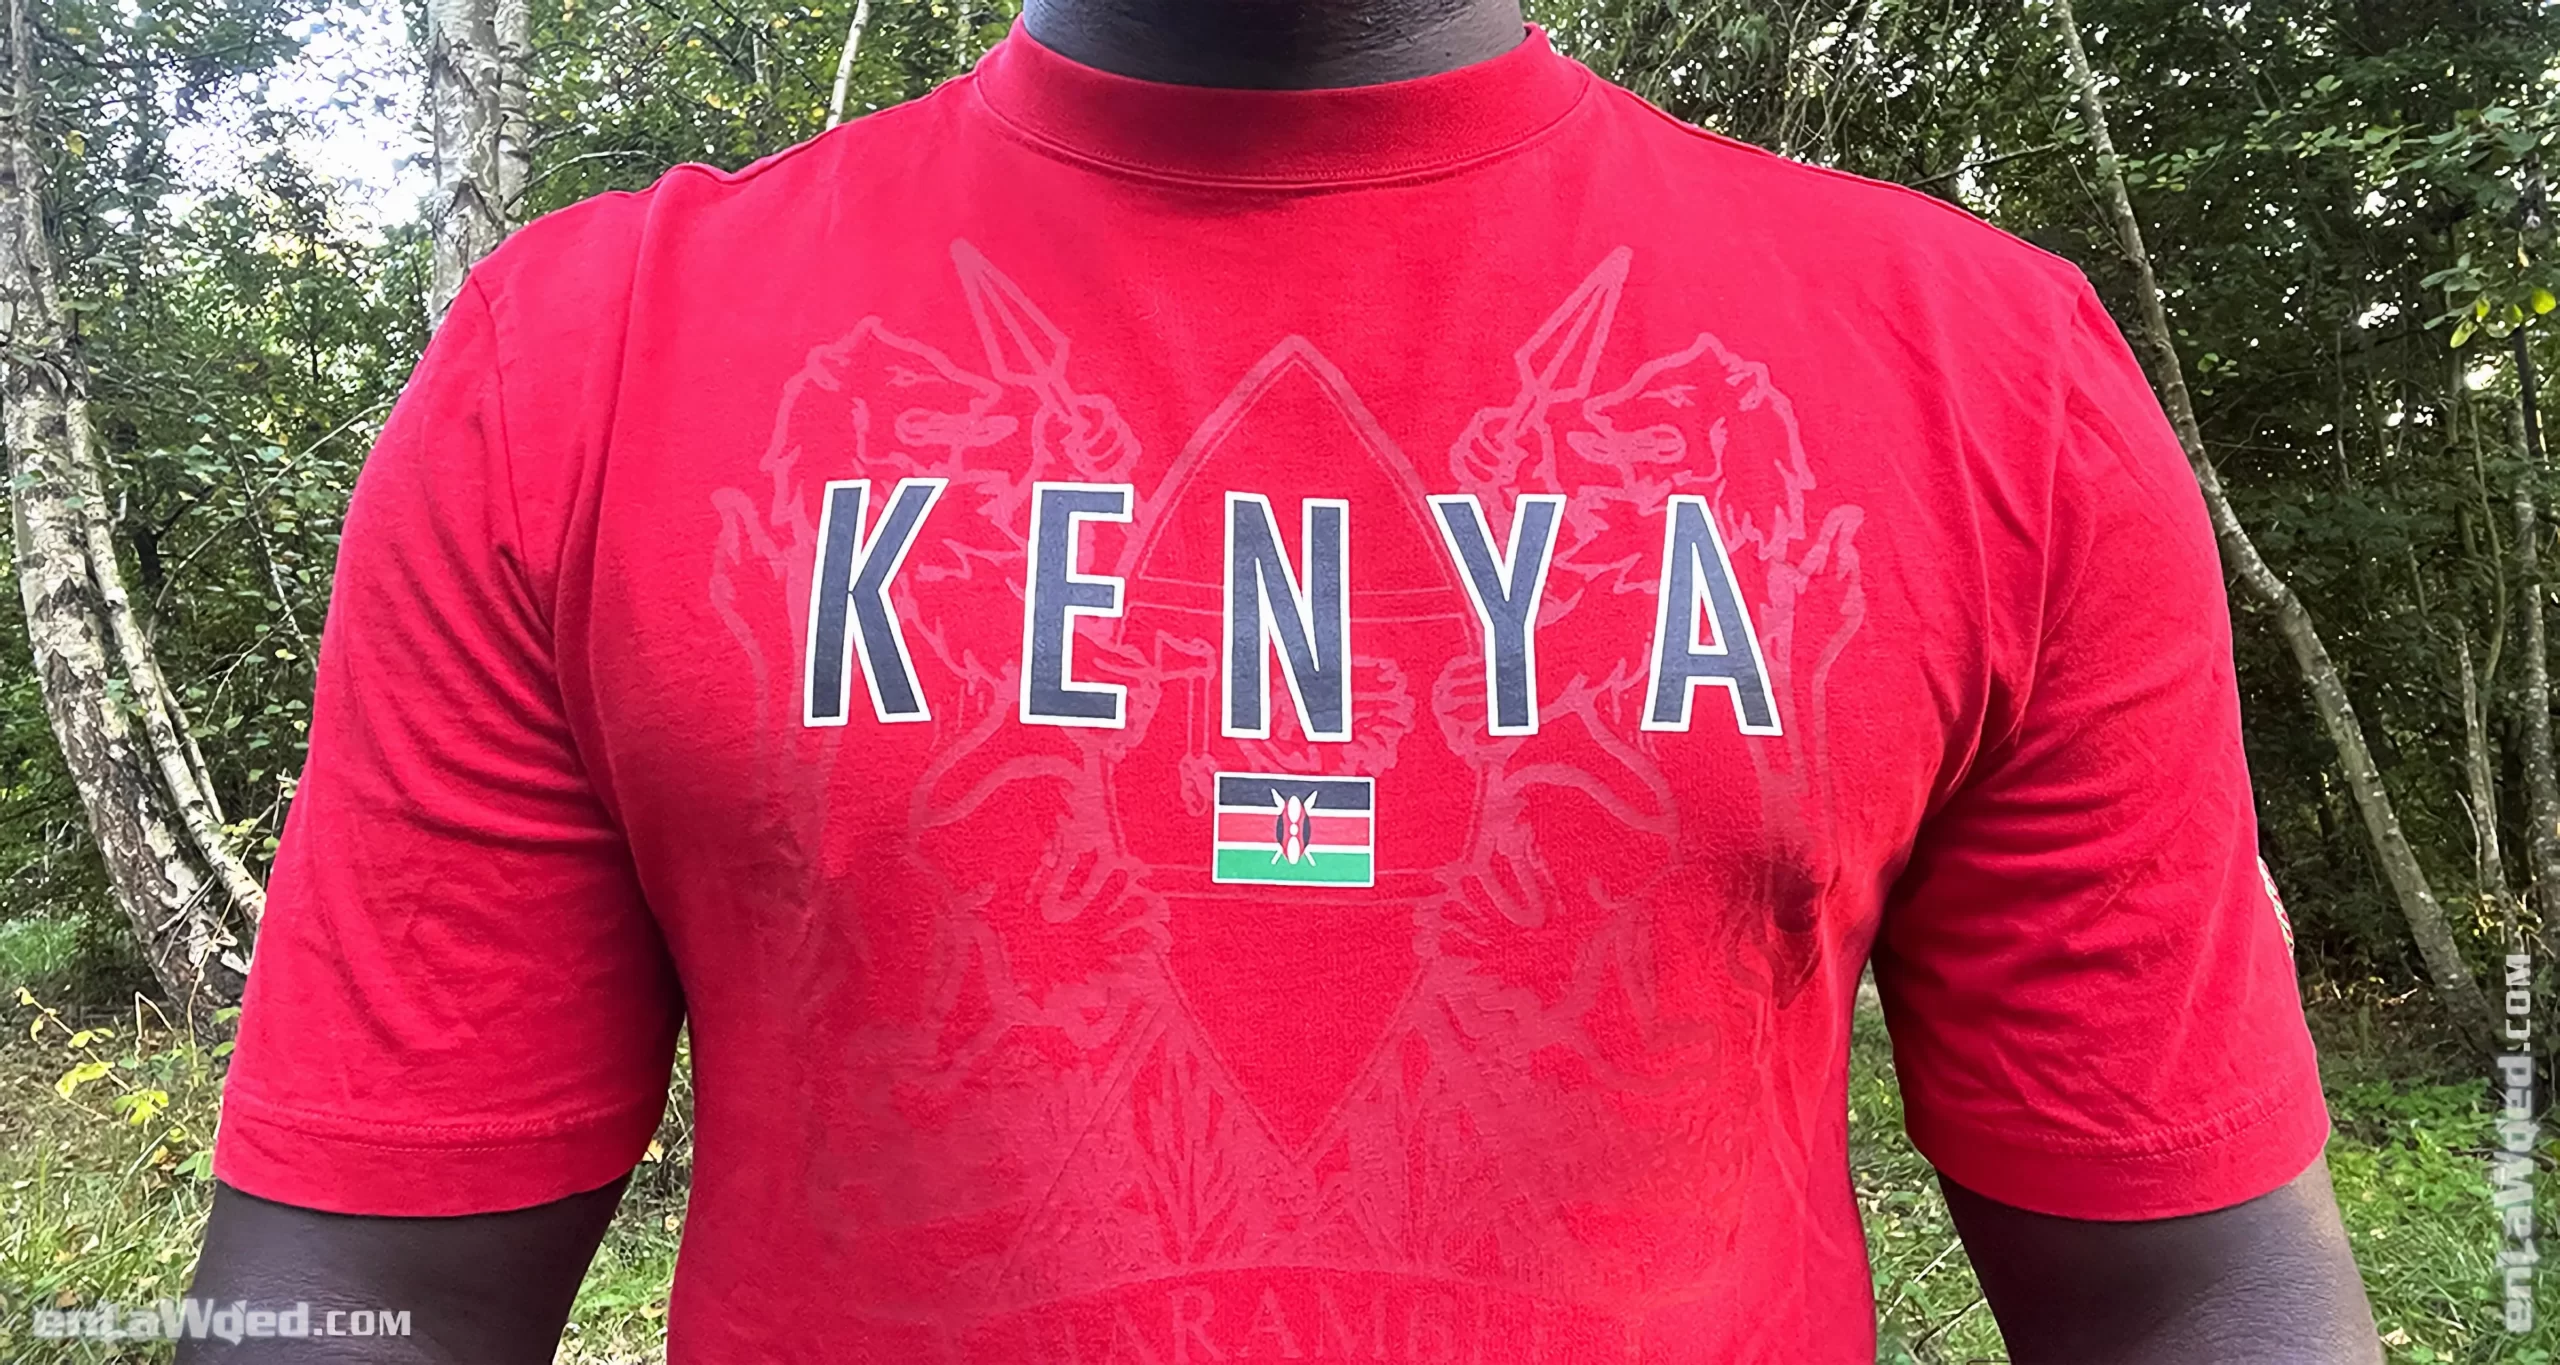 Men’s 2007 Kenya Harambee T-Shirt by Adidas Originals: Overnight (EnLawded.com file #lp1nbi3z126184fmh0m2o1vvt)